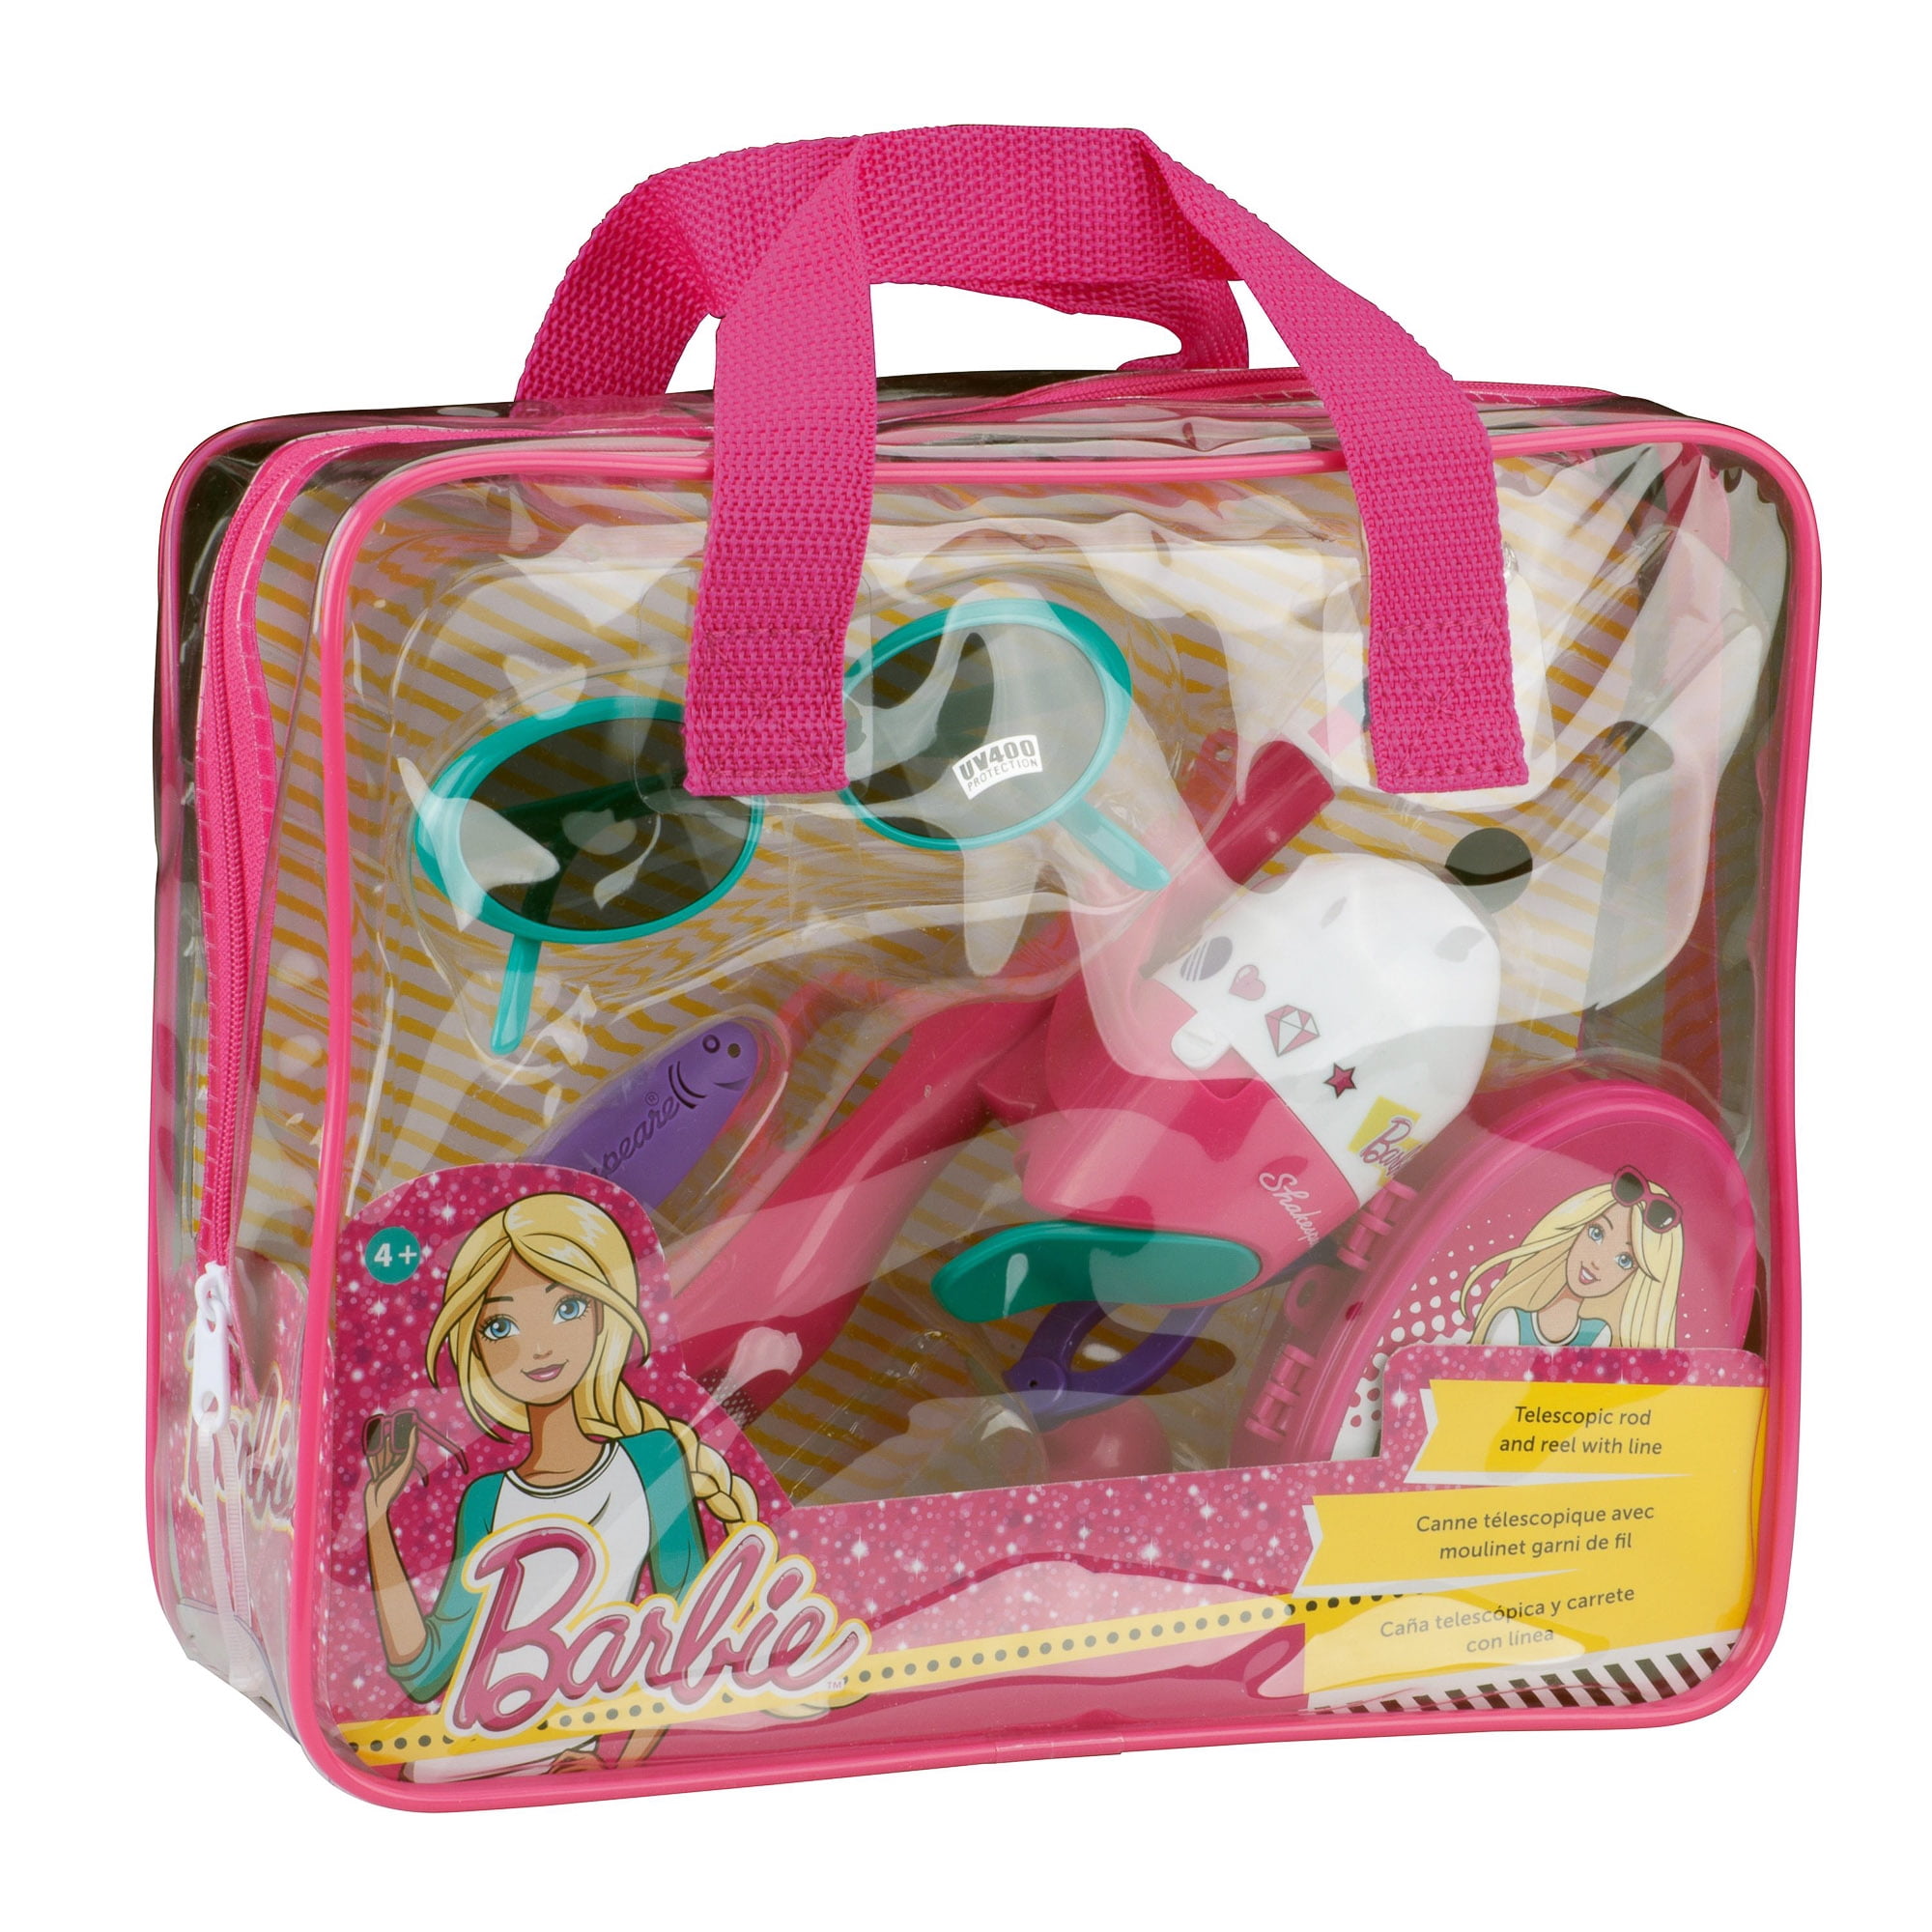 Barbiepurse Shakespeare Mattel Barbie Purse Fishing Kit 043388220974 for sale online 